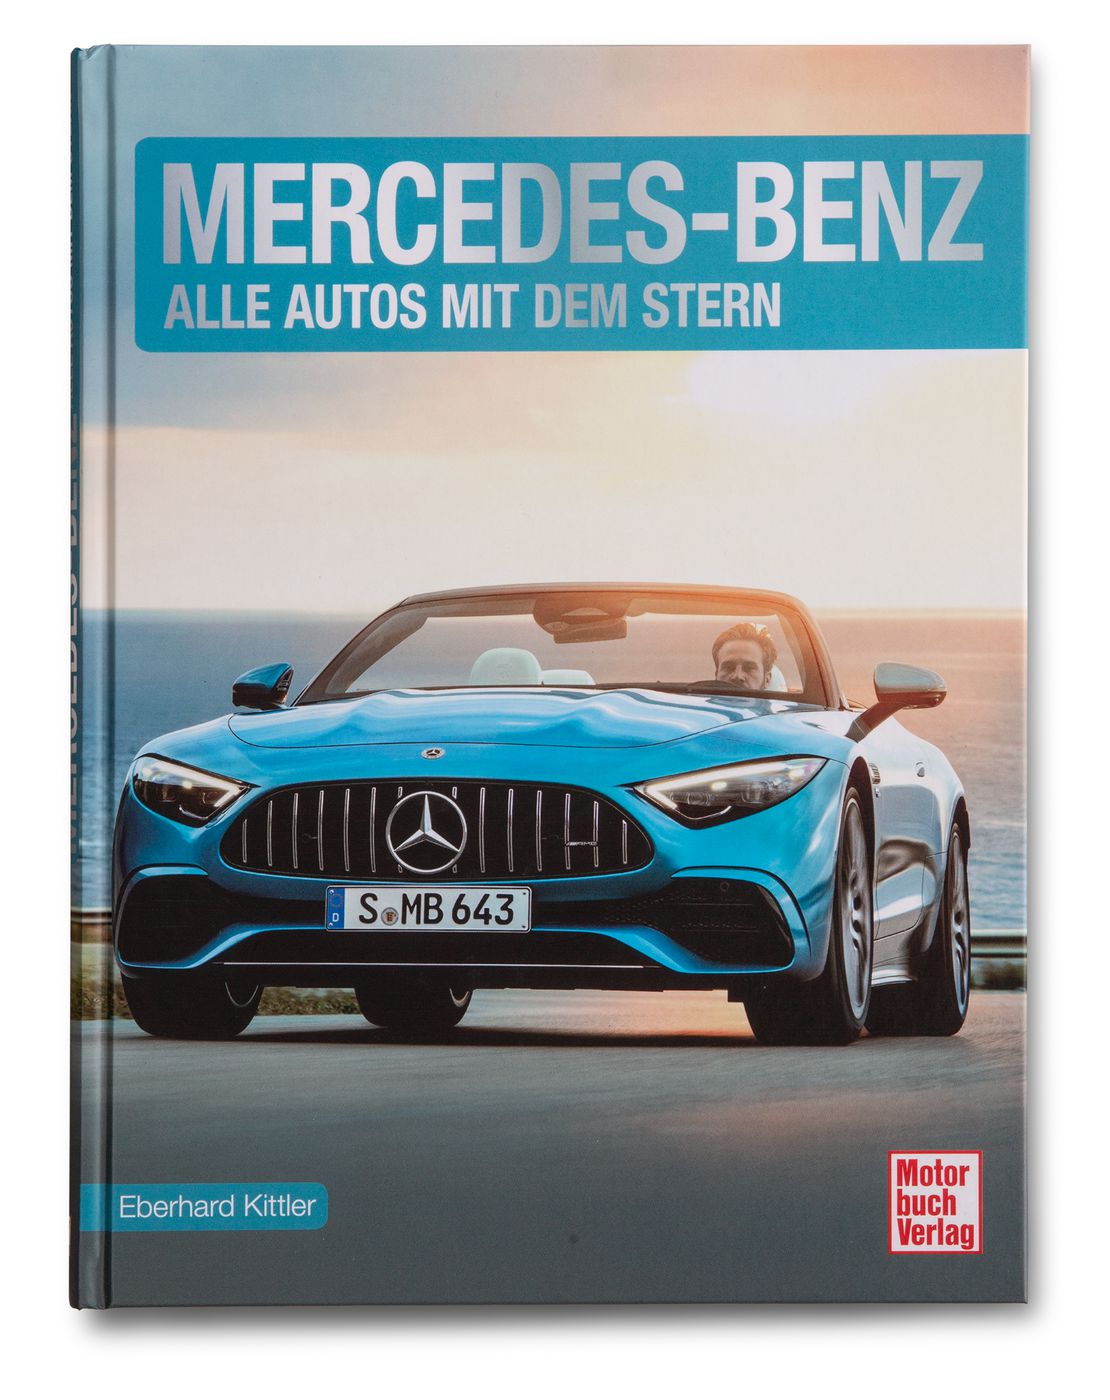 Mercedes-Benz
Mercedes-Benz
Mercedes-Benz
Mercedes-Benz
Mercedes